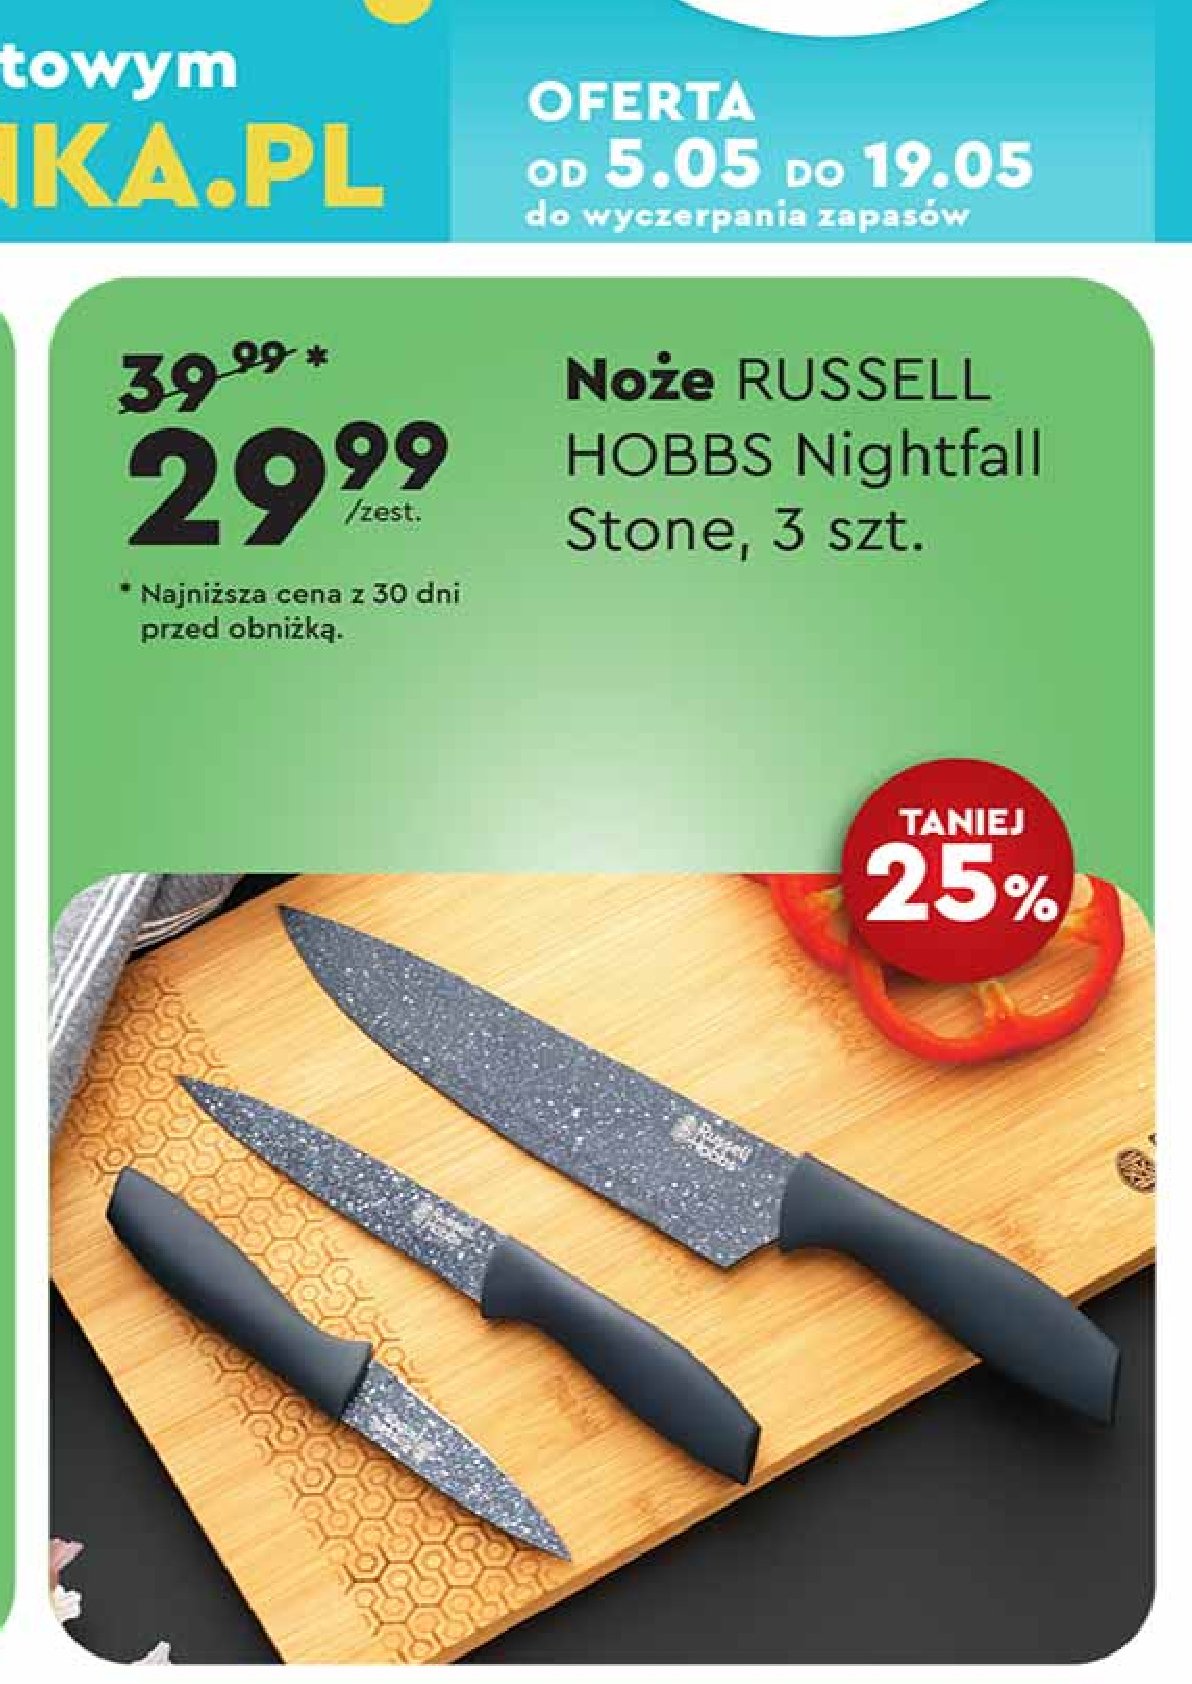 Noże nightfall stone Russell hobbs promocja w Biedronka